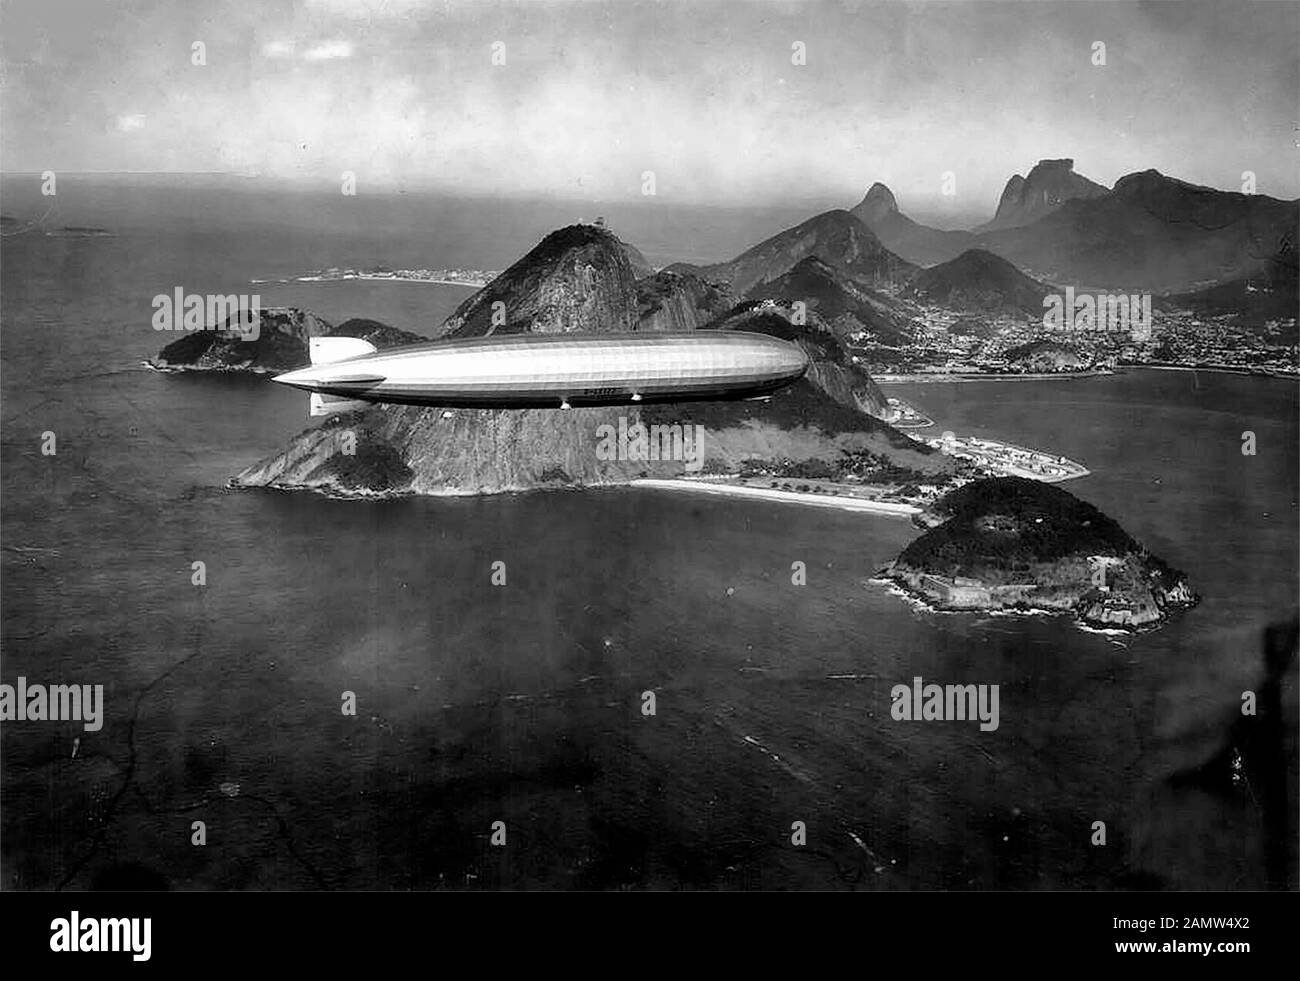 Luftschiff LZ 127 "Graf Zepelin" über Rio de Janeiro, Brasilien, 25. Mai 1930 Stockfoto